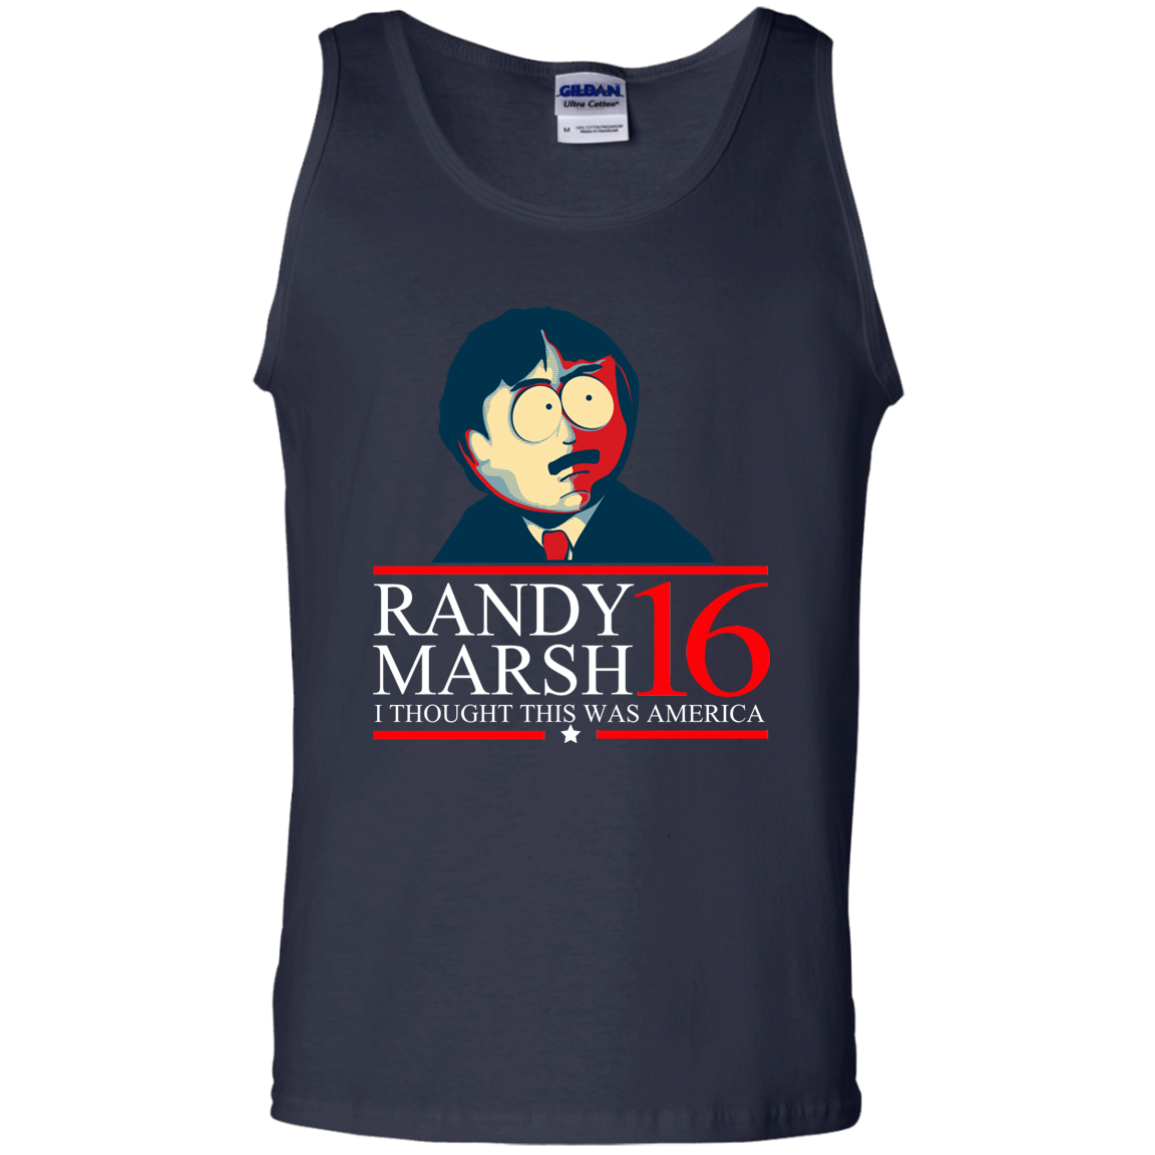 Randy Marsh 2016 T-Shirt, Hoodies - ifrogtees